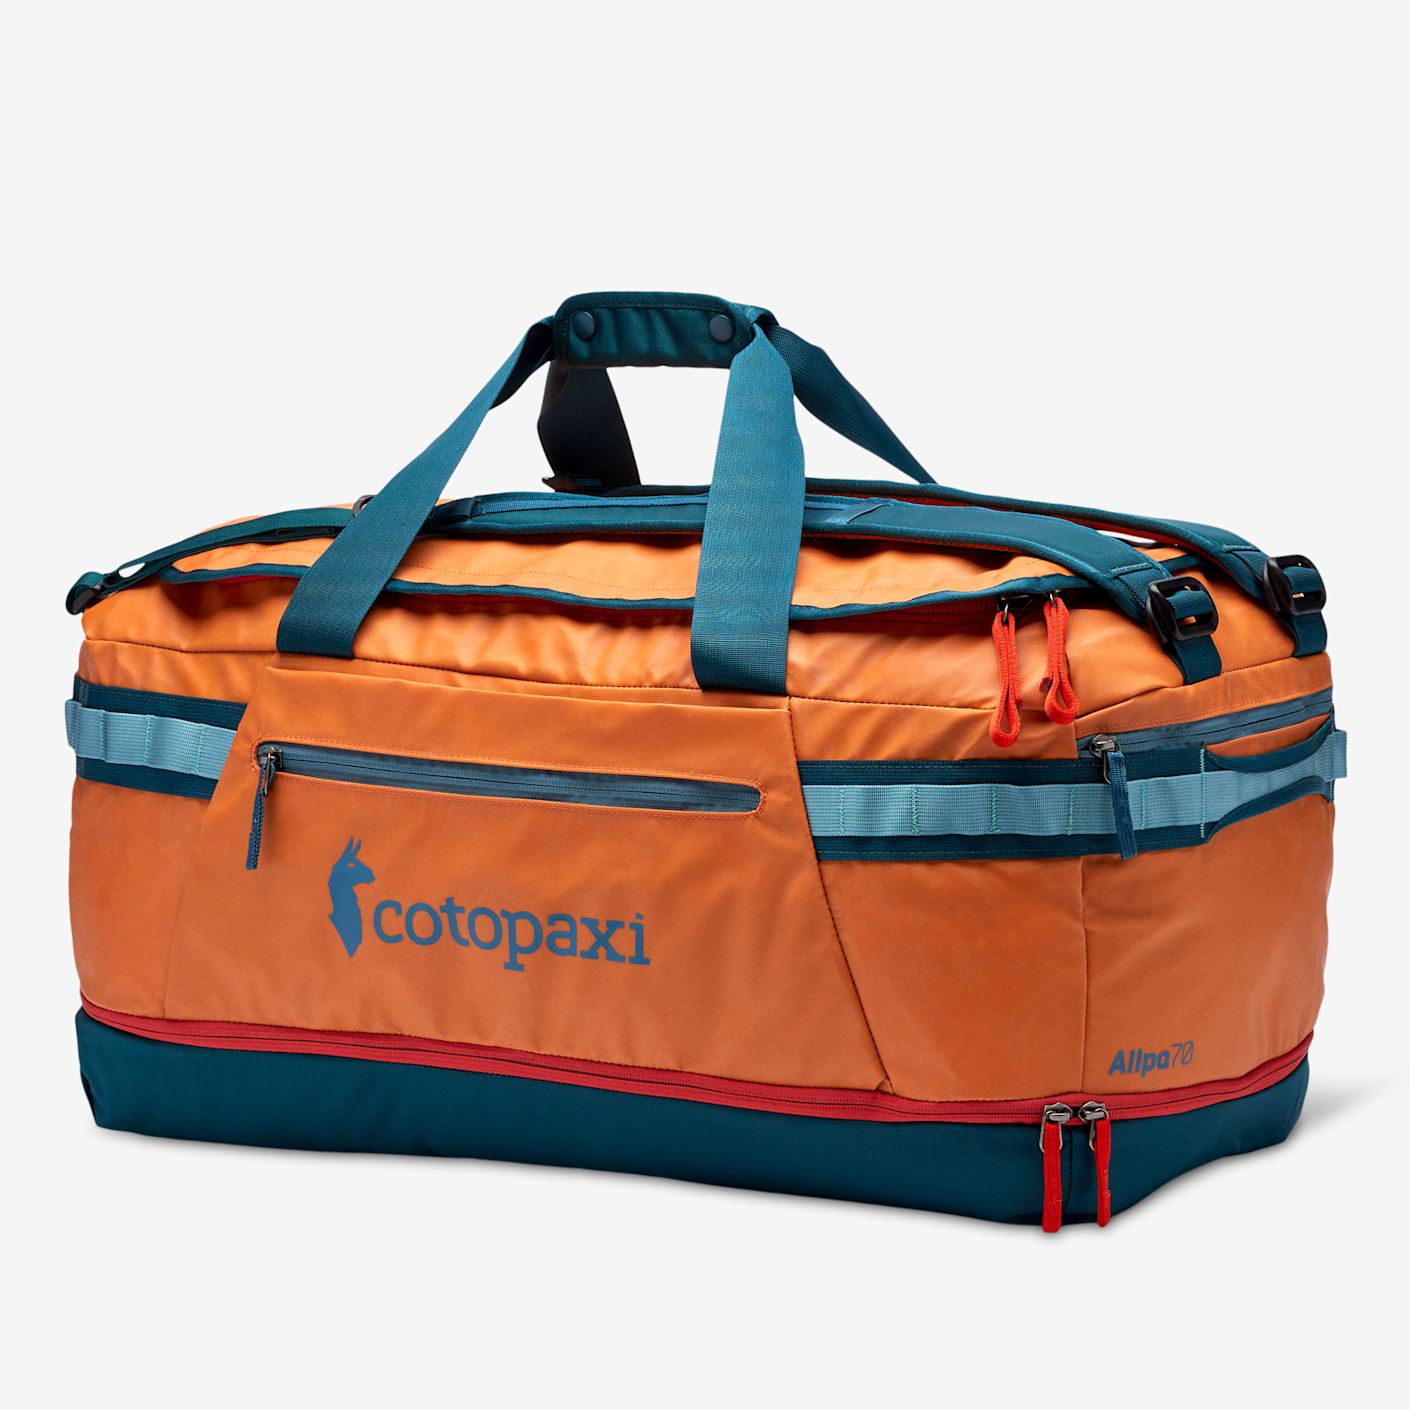 Cotopaxi Allpa 70L Duffel Bag | Bespoke Post